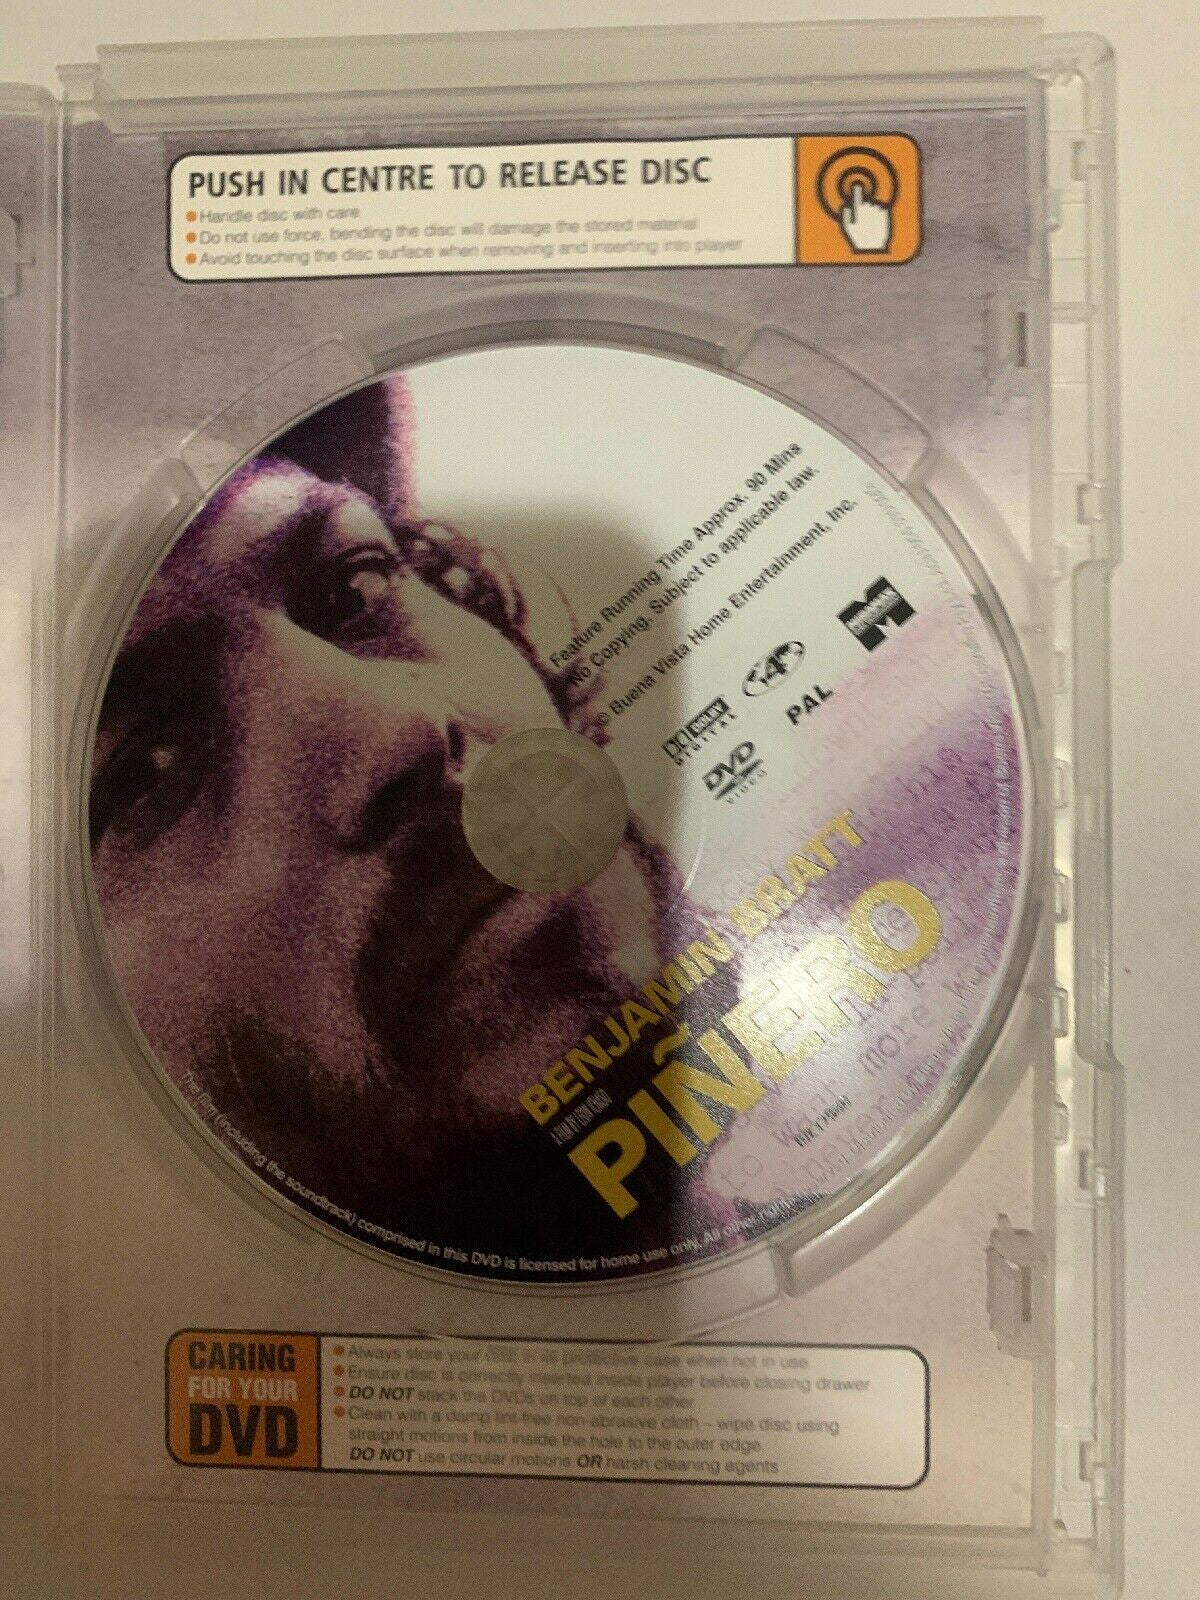 Pinero (DVD, 2001) Benjamin Bratt, Giancarlo Esposito, Talisa Soto. Region 4